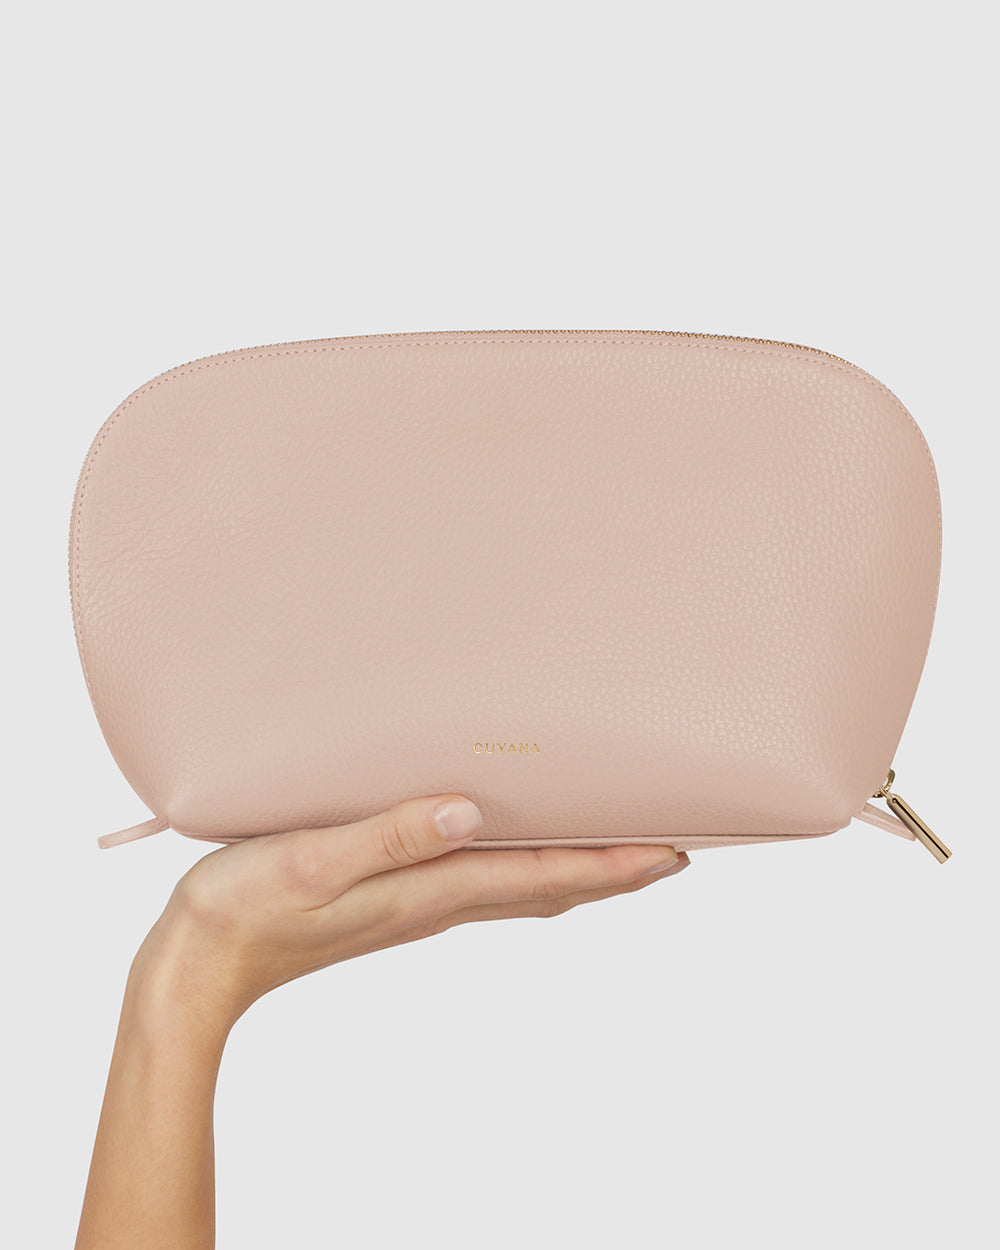 Hand holding a textured clutch purse with a zipper closure.